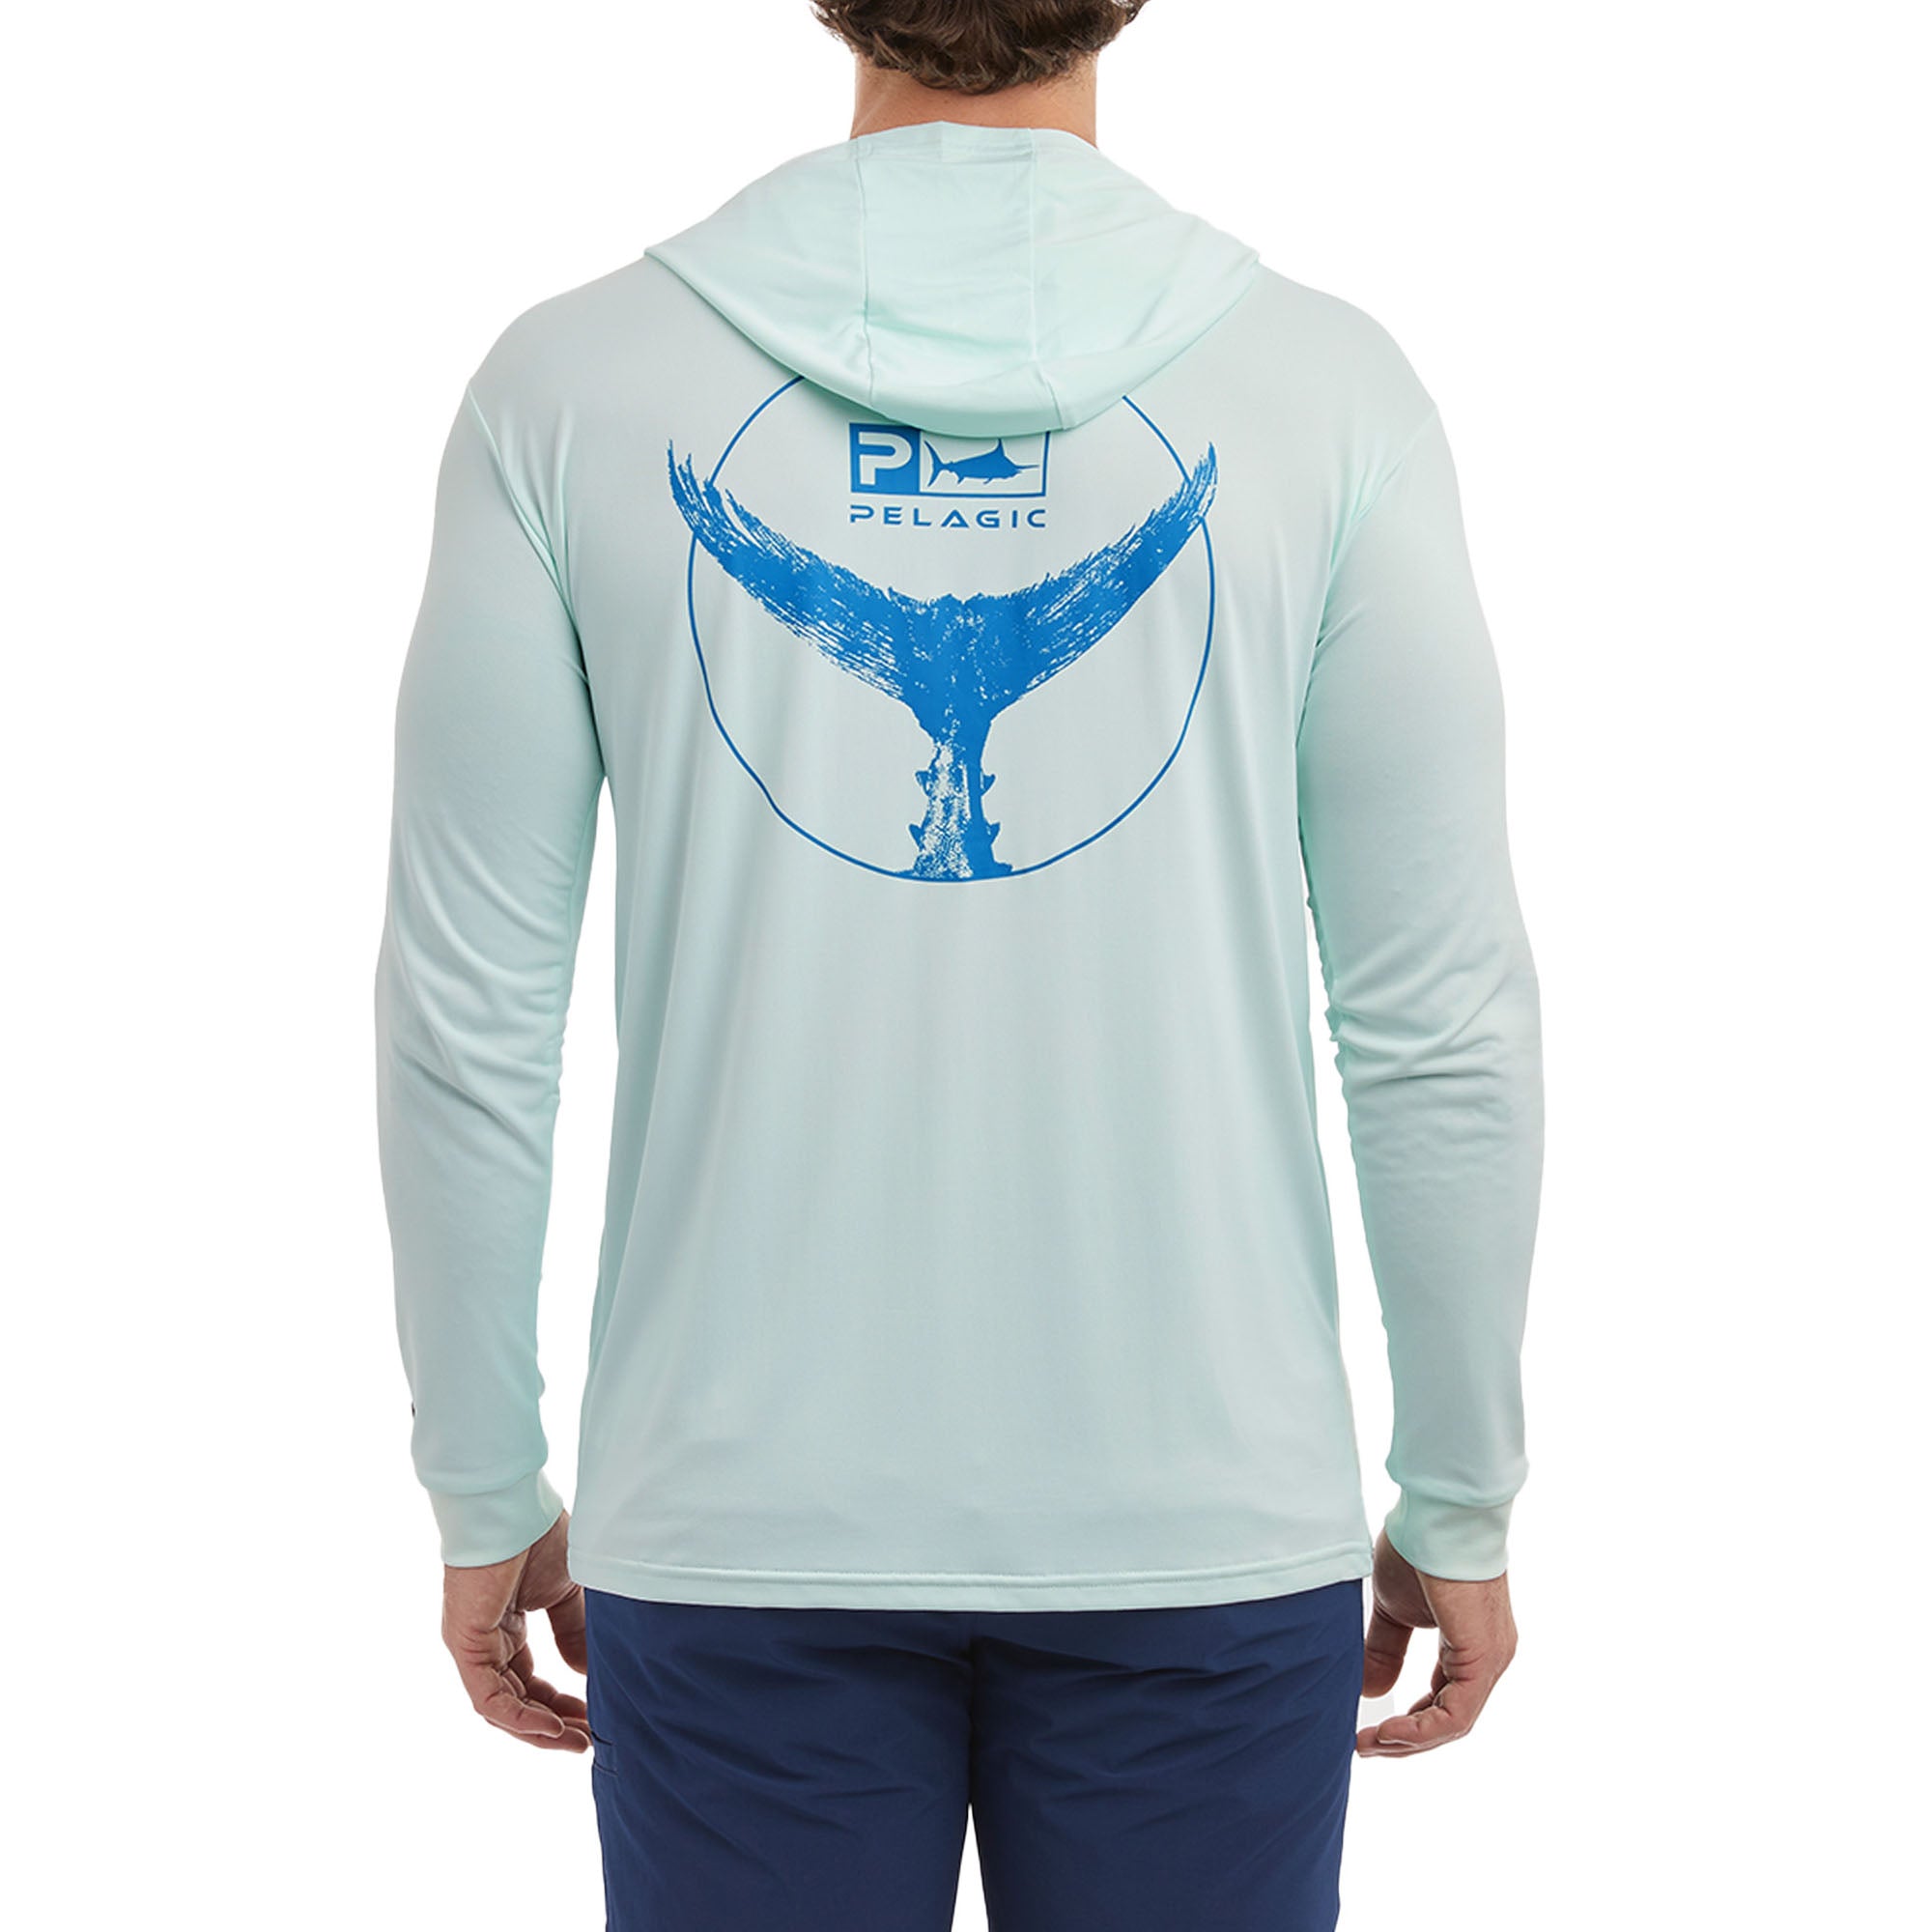 Huk Performance Fishing Shirt Men's XXL Blue Aqua Long Sleeve